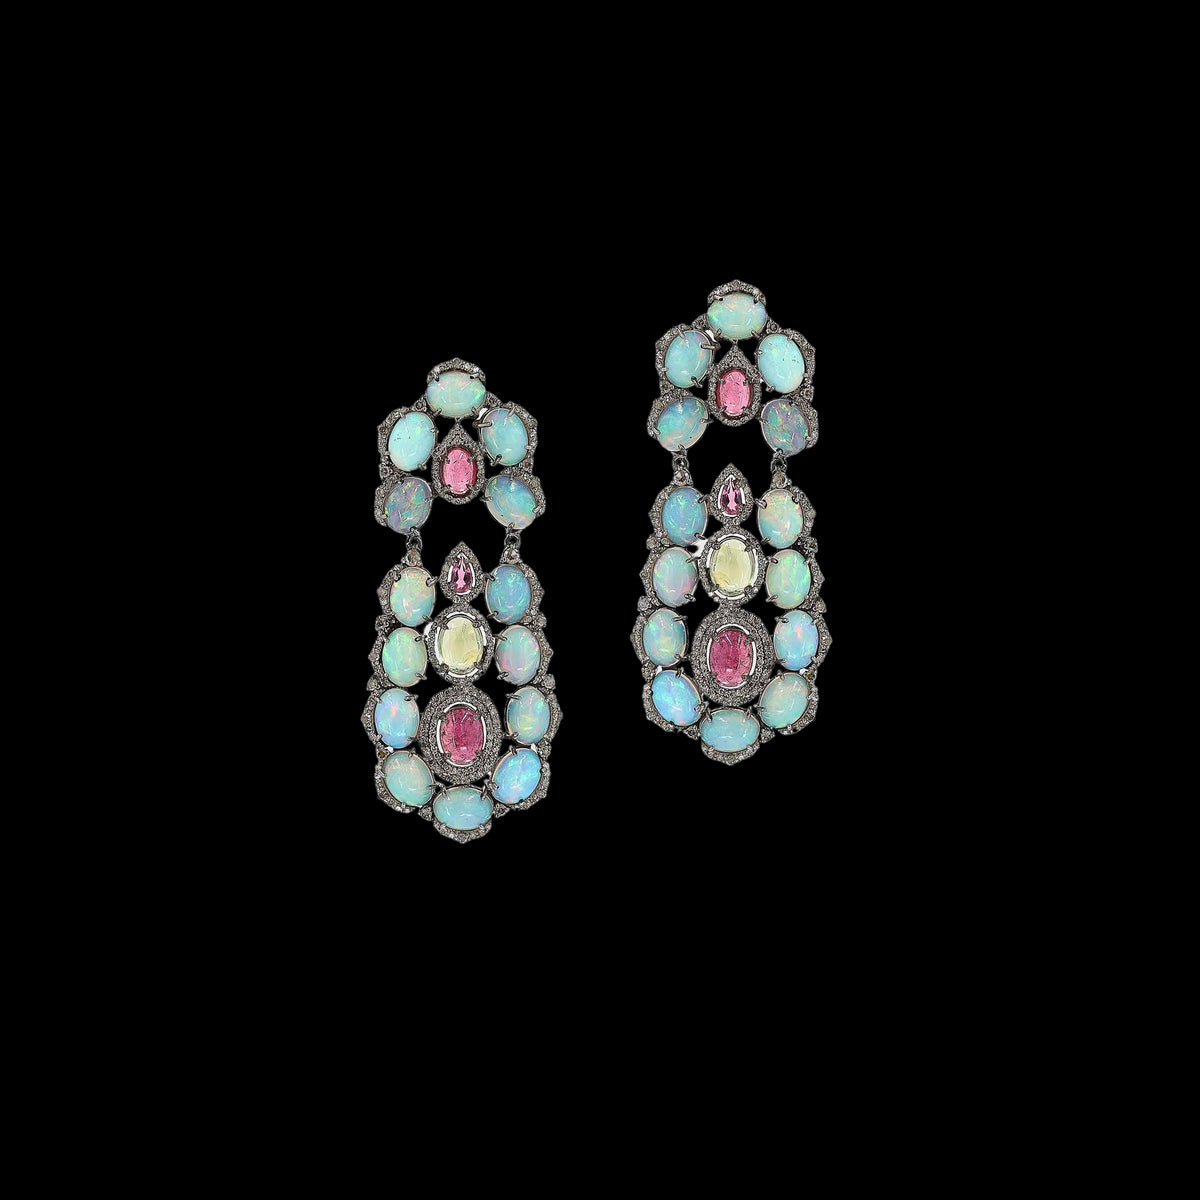 Kamalini Diamond, Pink Tourmaline, and Opal Earrings